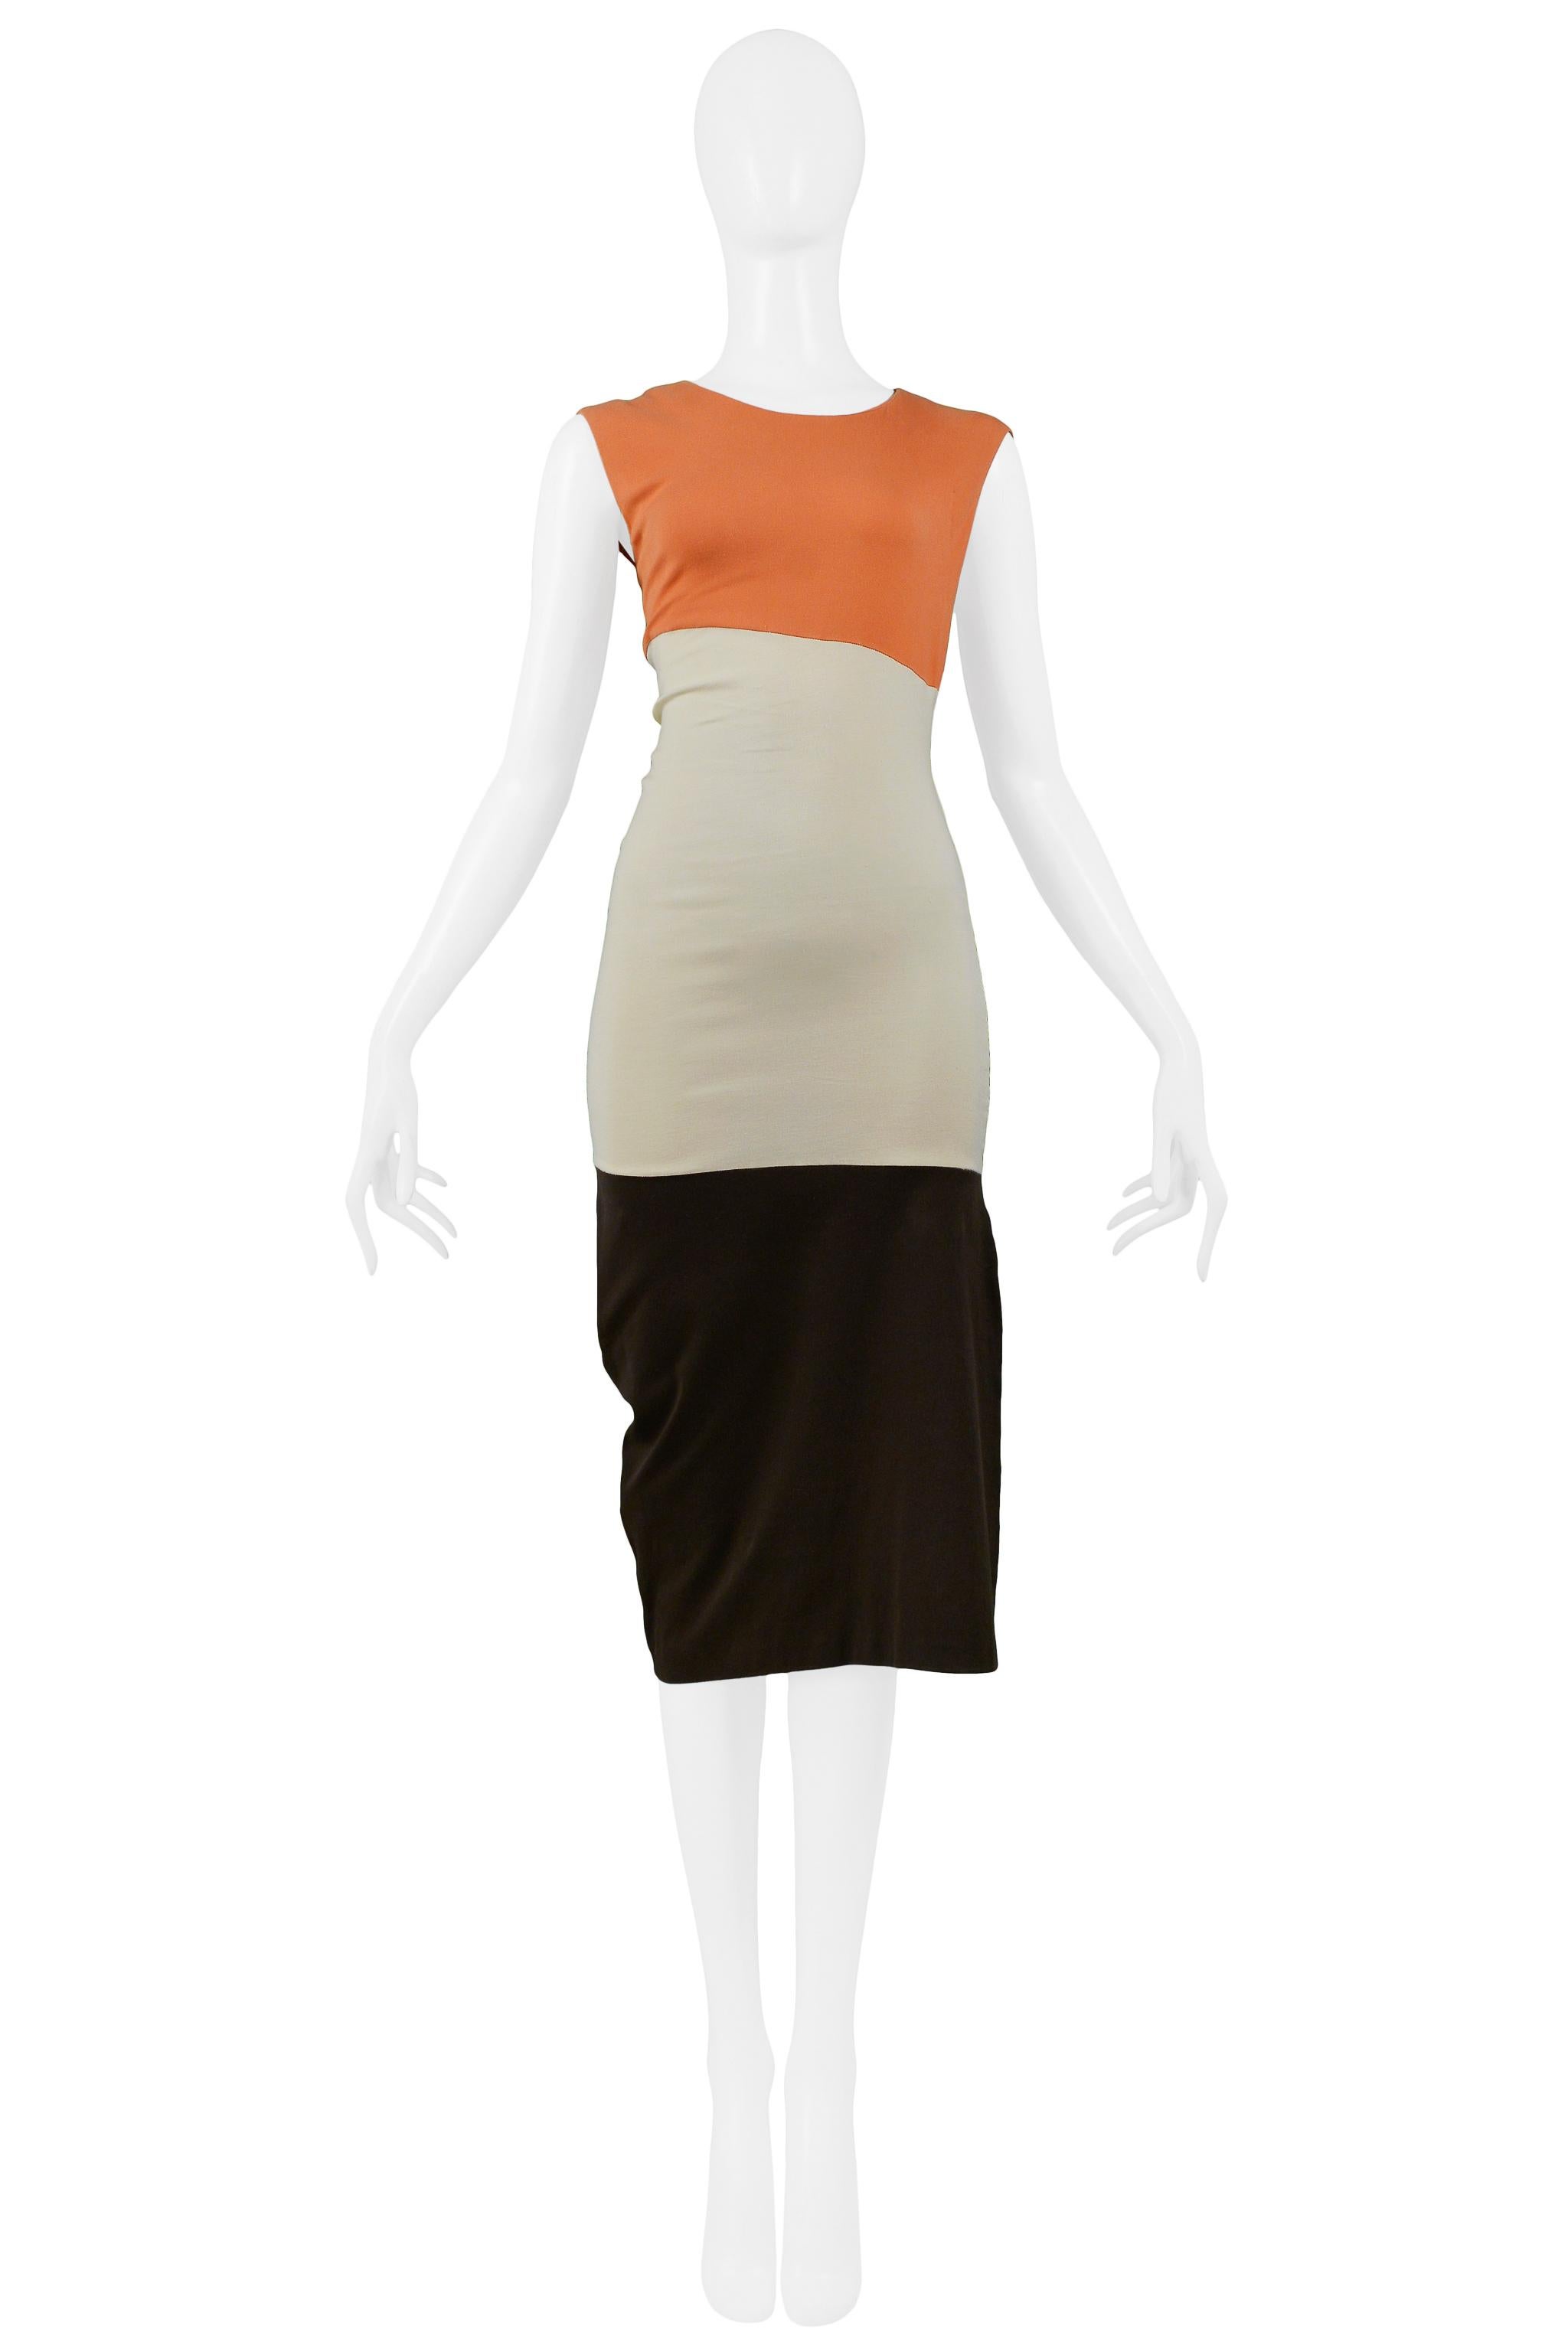 Women's Helmut Lang Coral Ivory & Brown Color Block Knit Dress 1990 For Sale